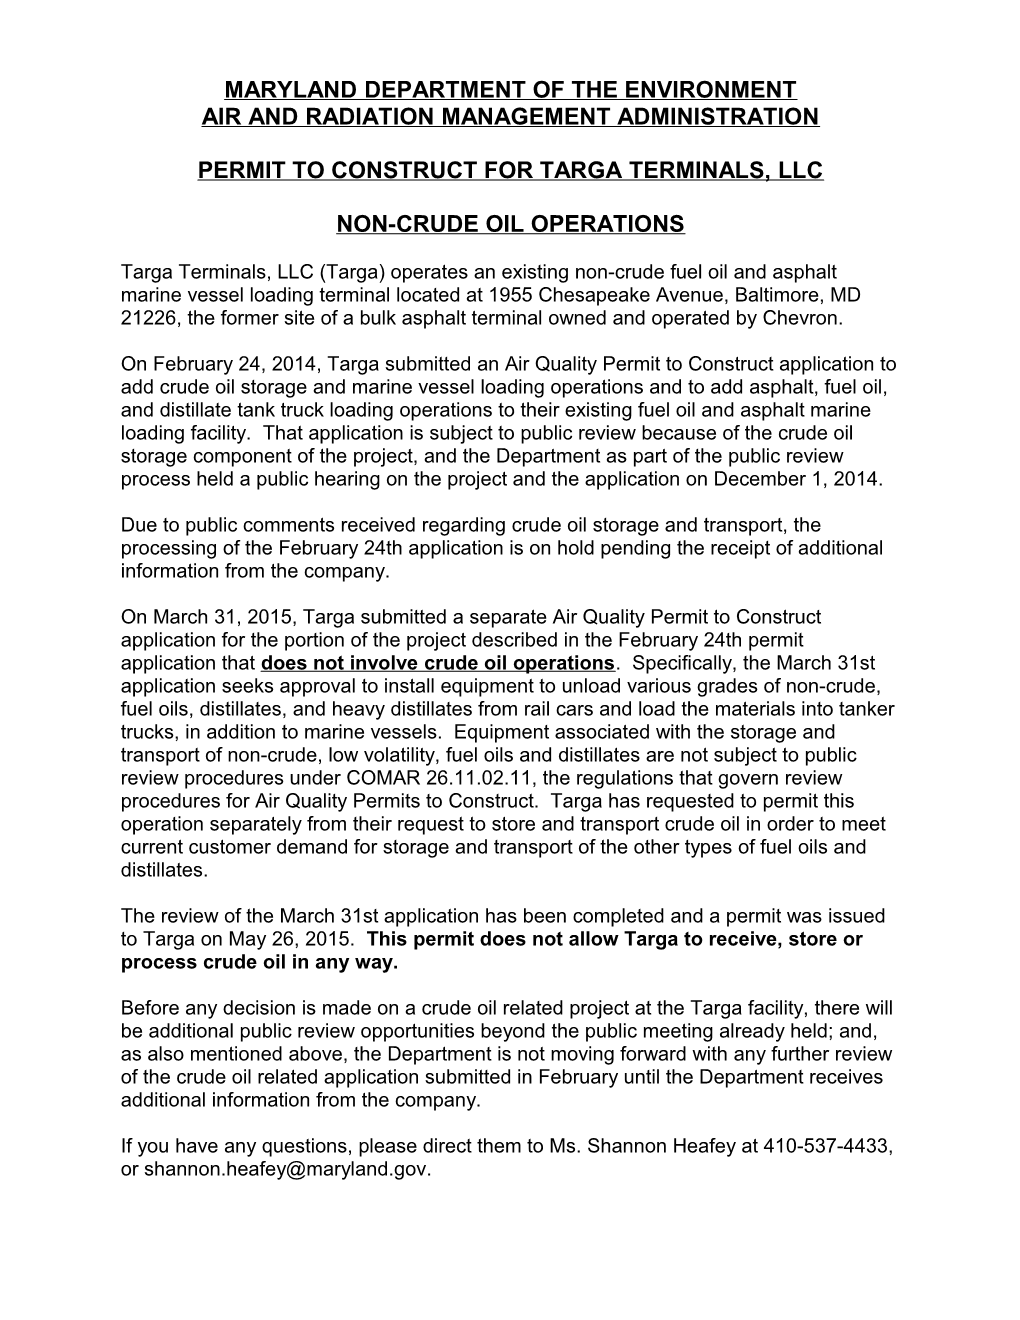 Targa Terminals, LLC Steps of Permit Issuance